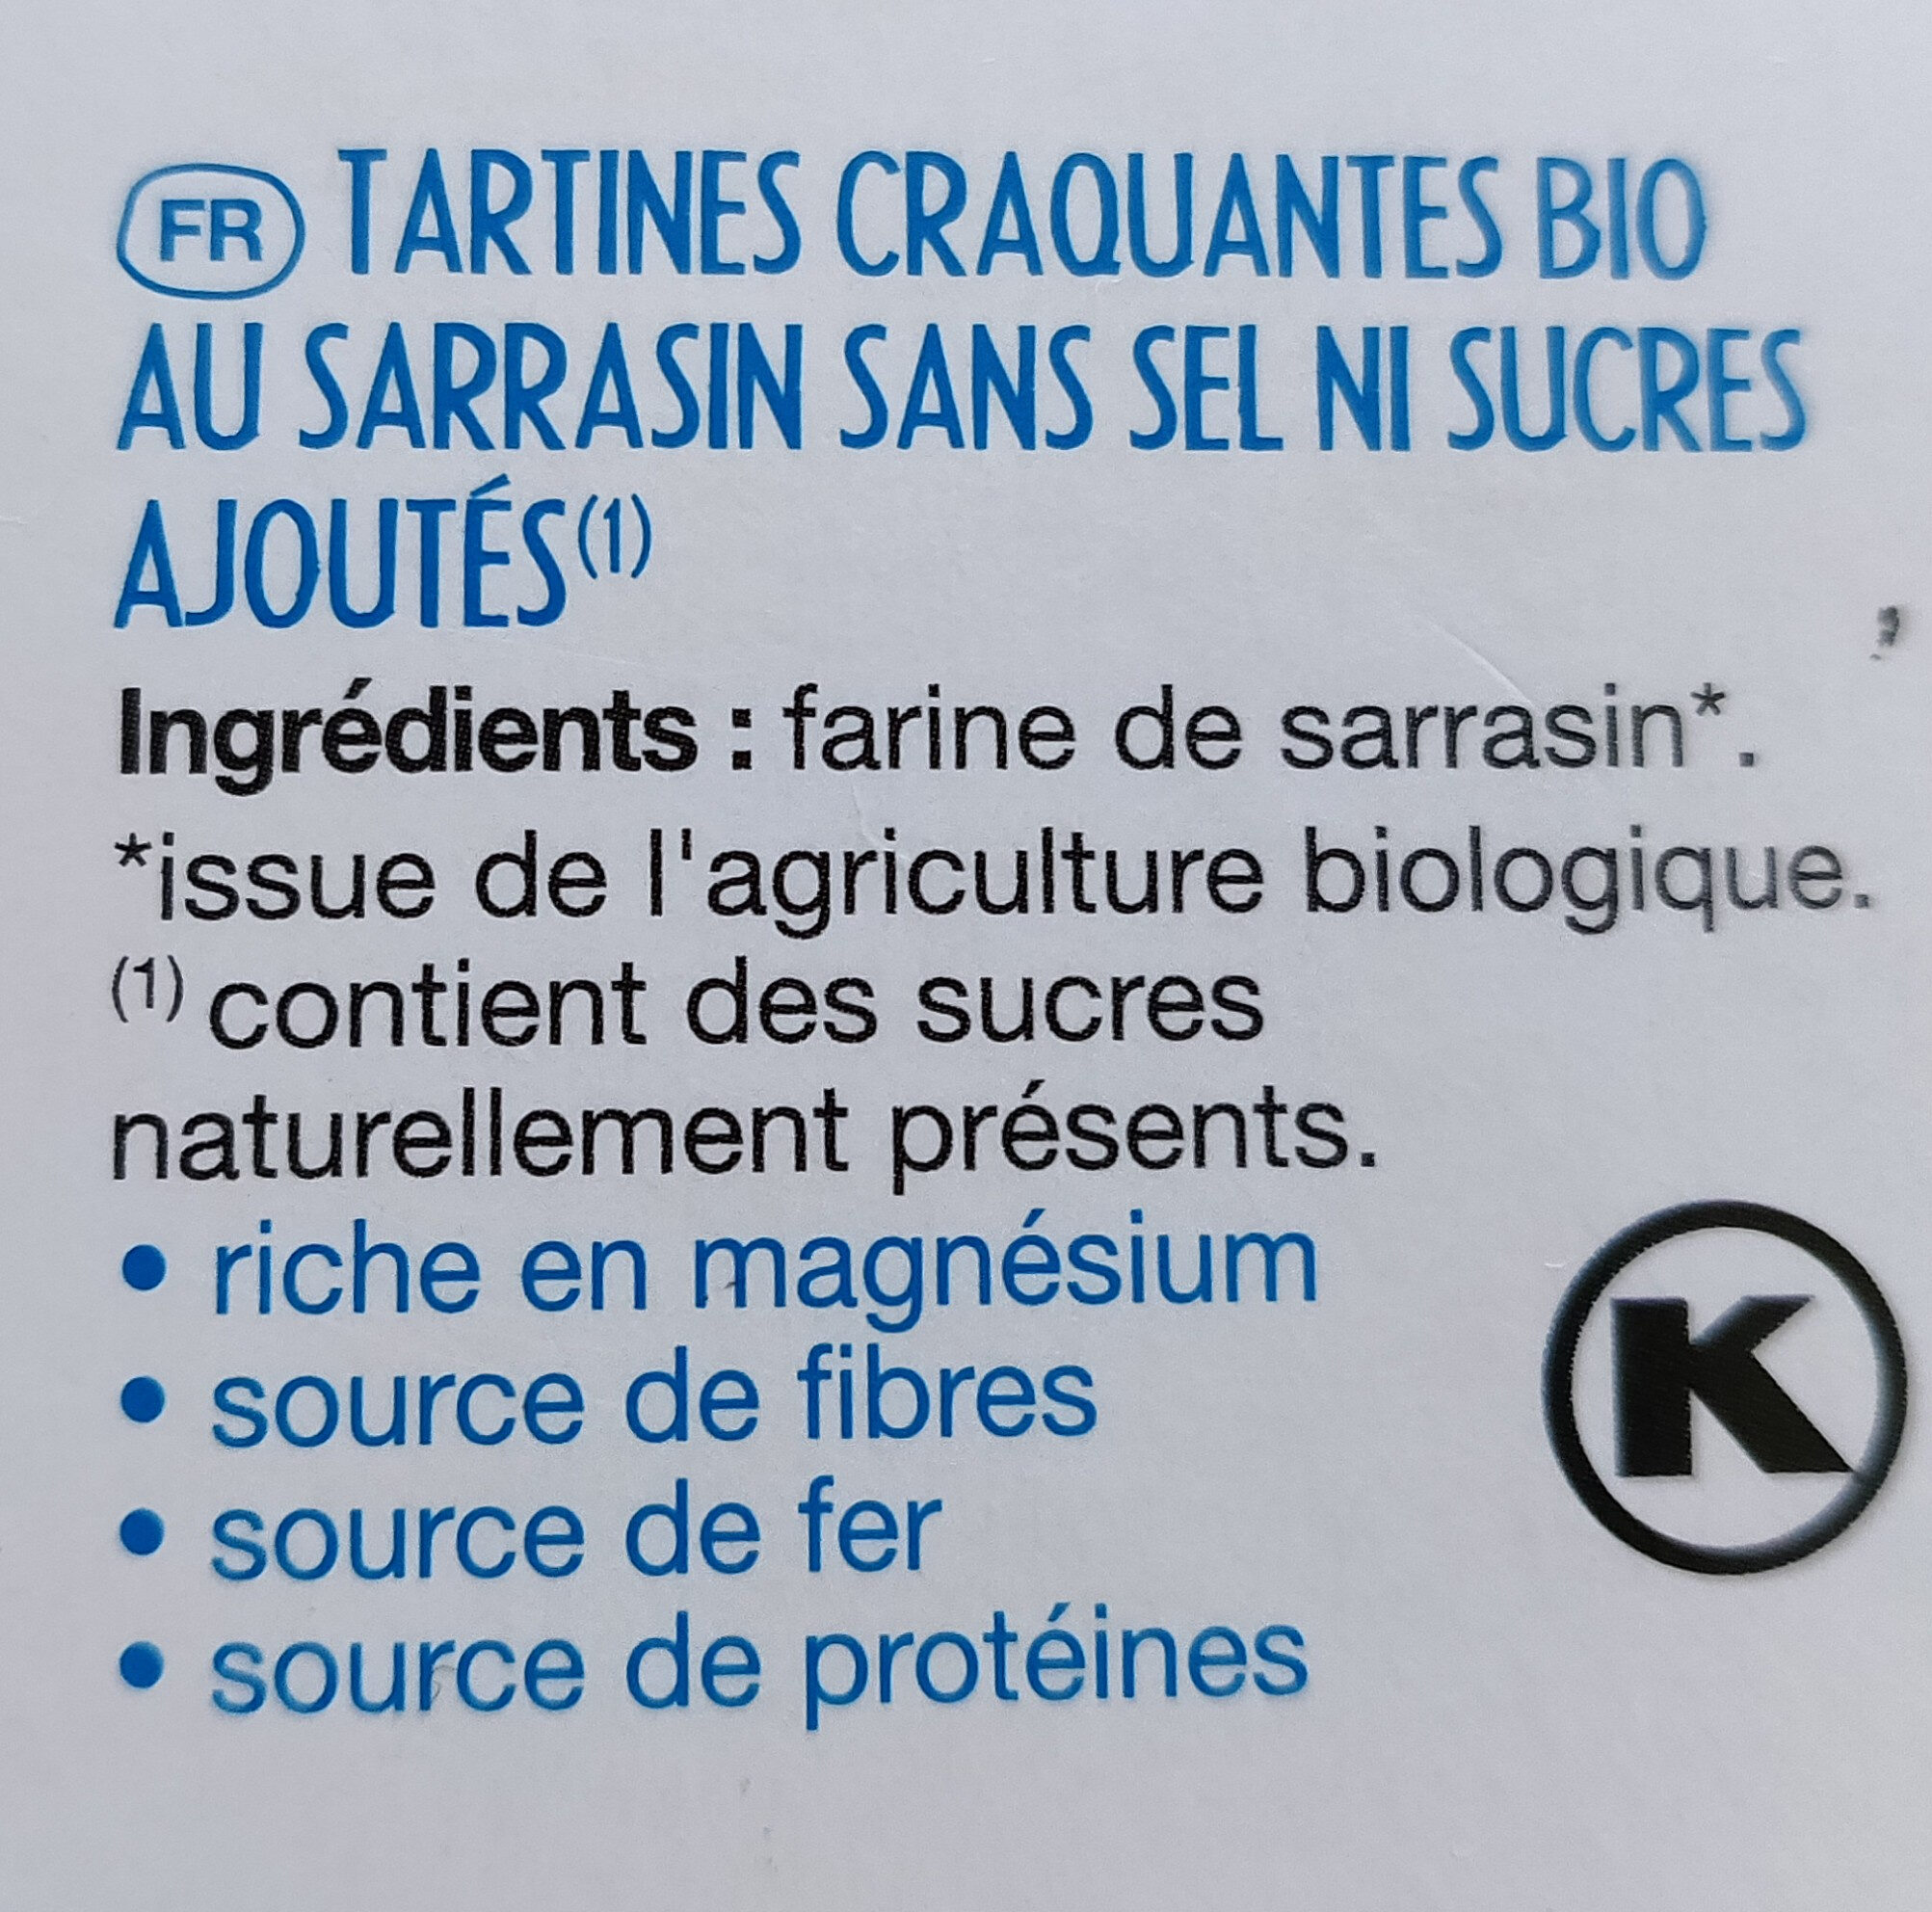 Tartines craquantes bio au sarrasin sans sel ni sucres ajoutés - Ingrédients